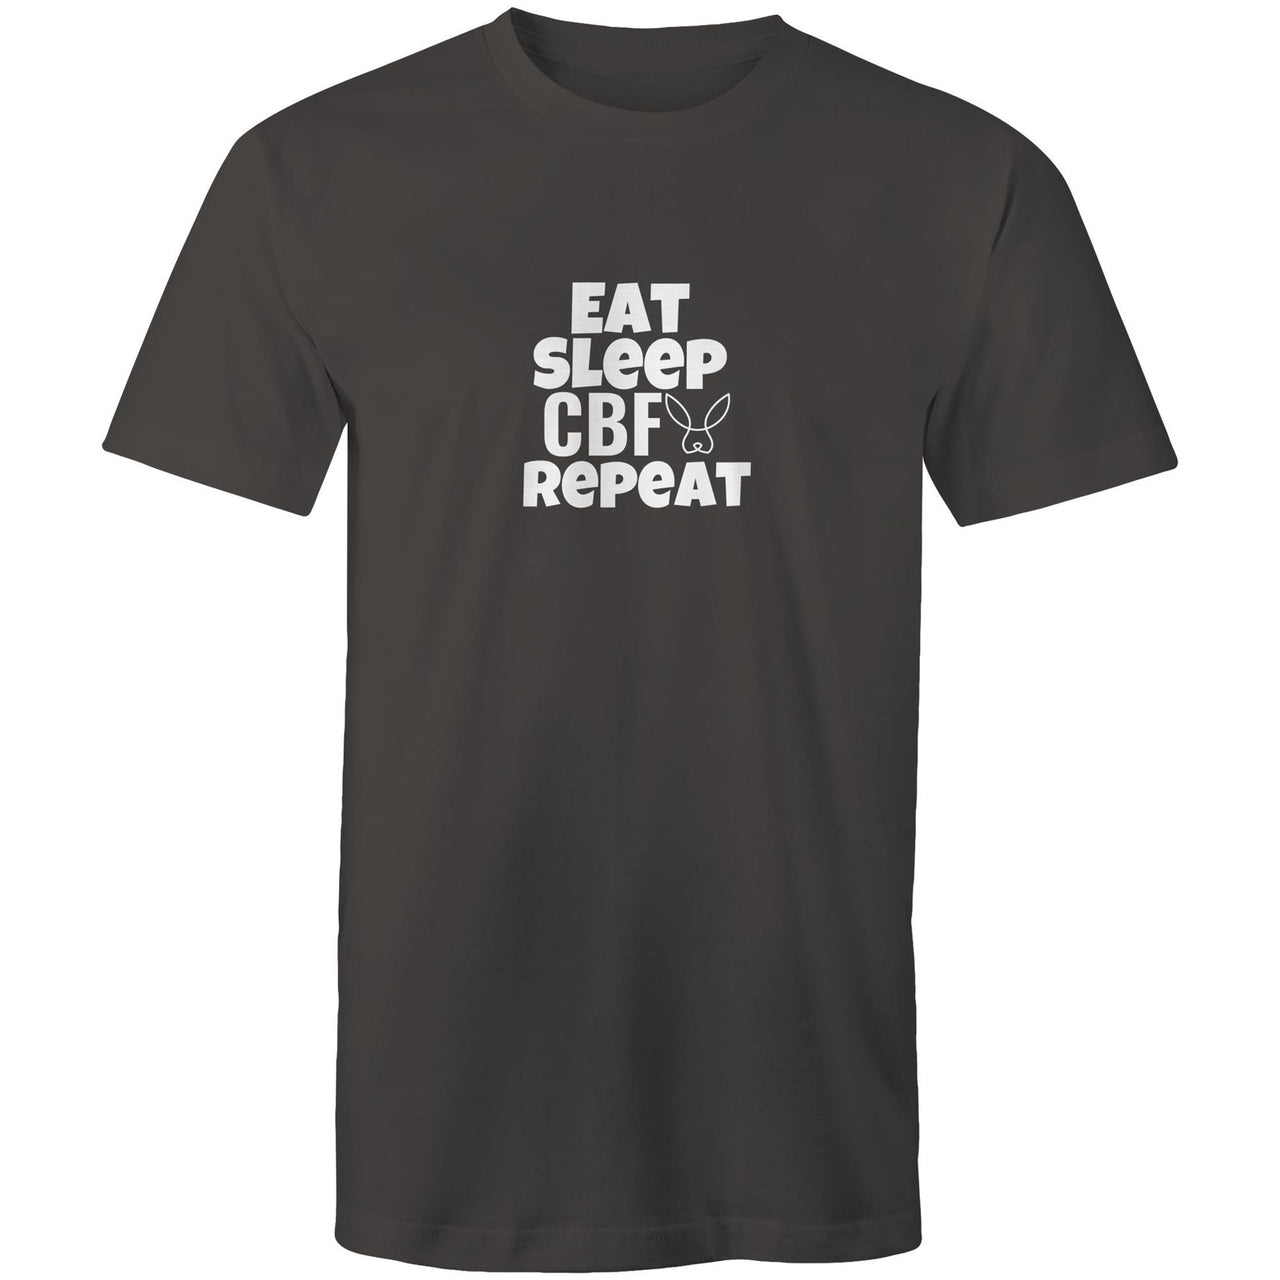 Eat Sleep CBF Repeat Crew Charcoal T-Shirt by CBF Clothing